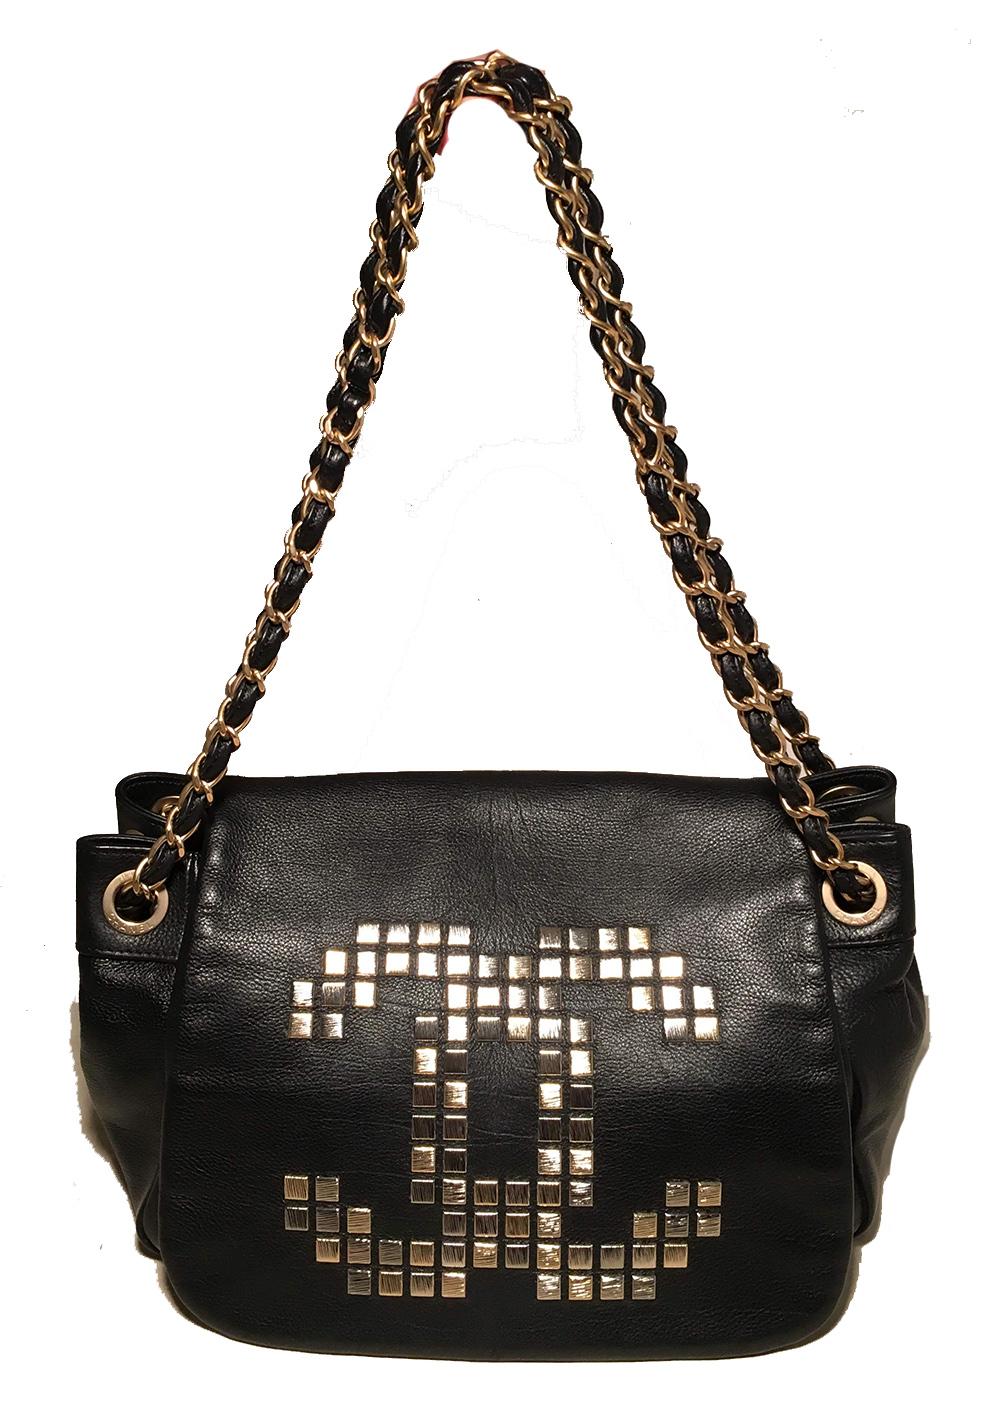 Chanel Black Leather Mosaic Studded Accordion Classic Flap Shoulder Bag 7